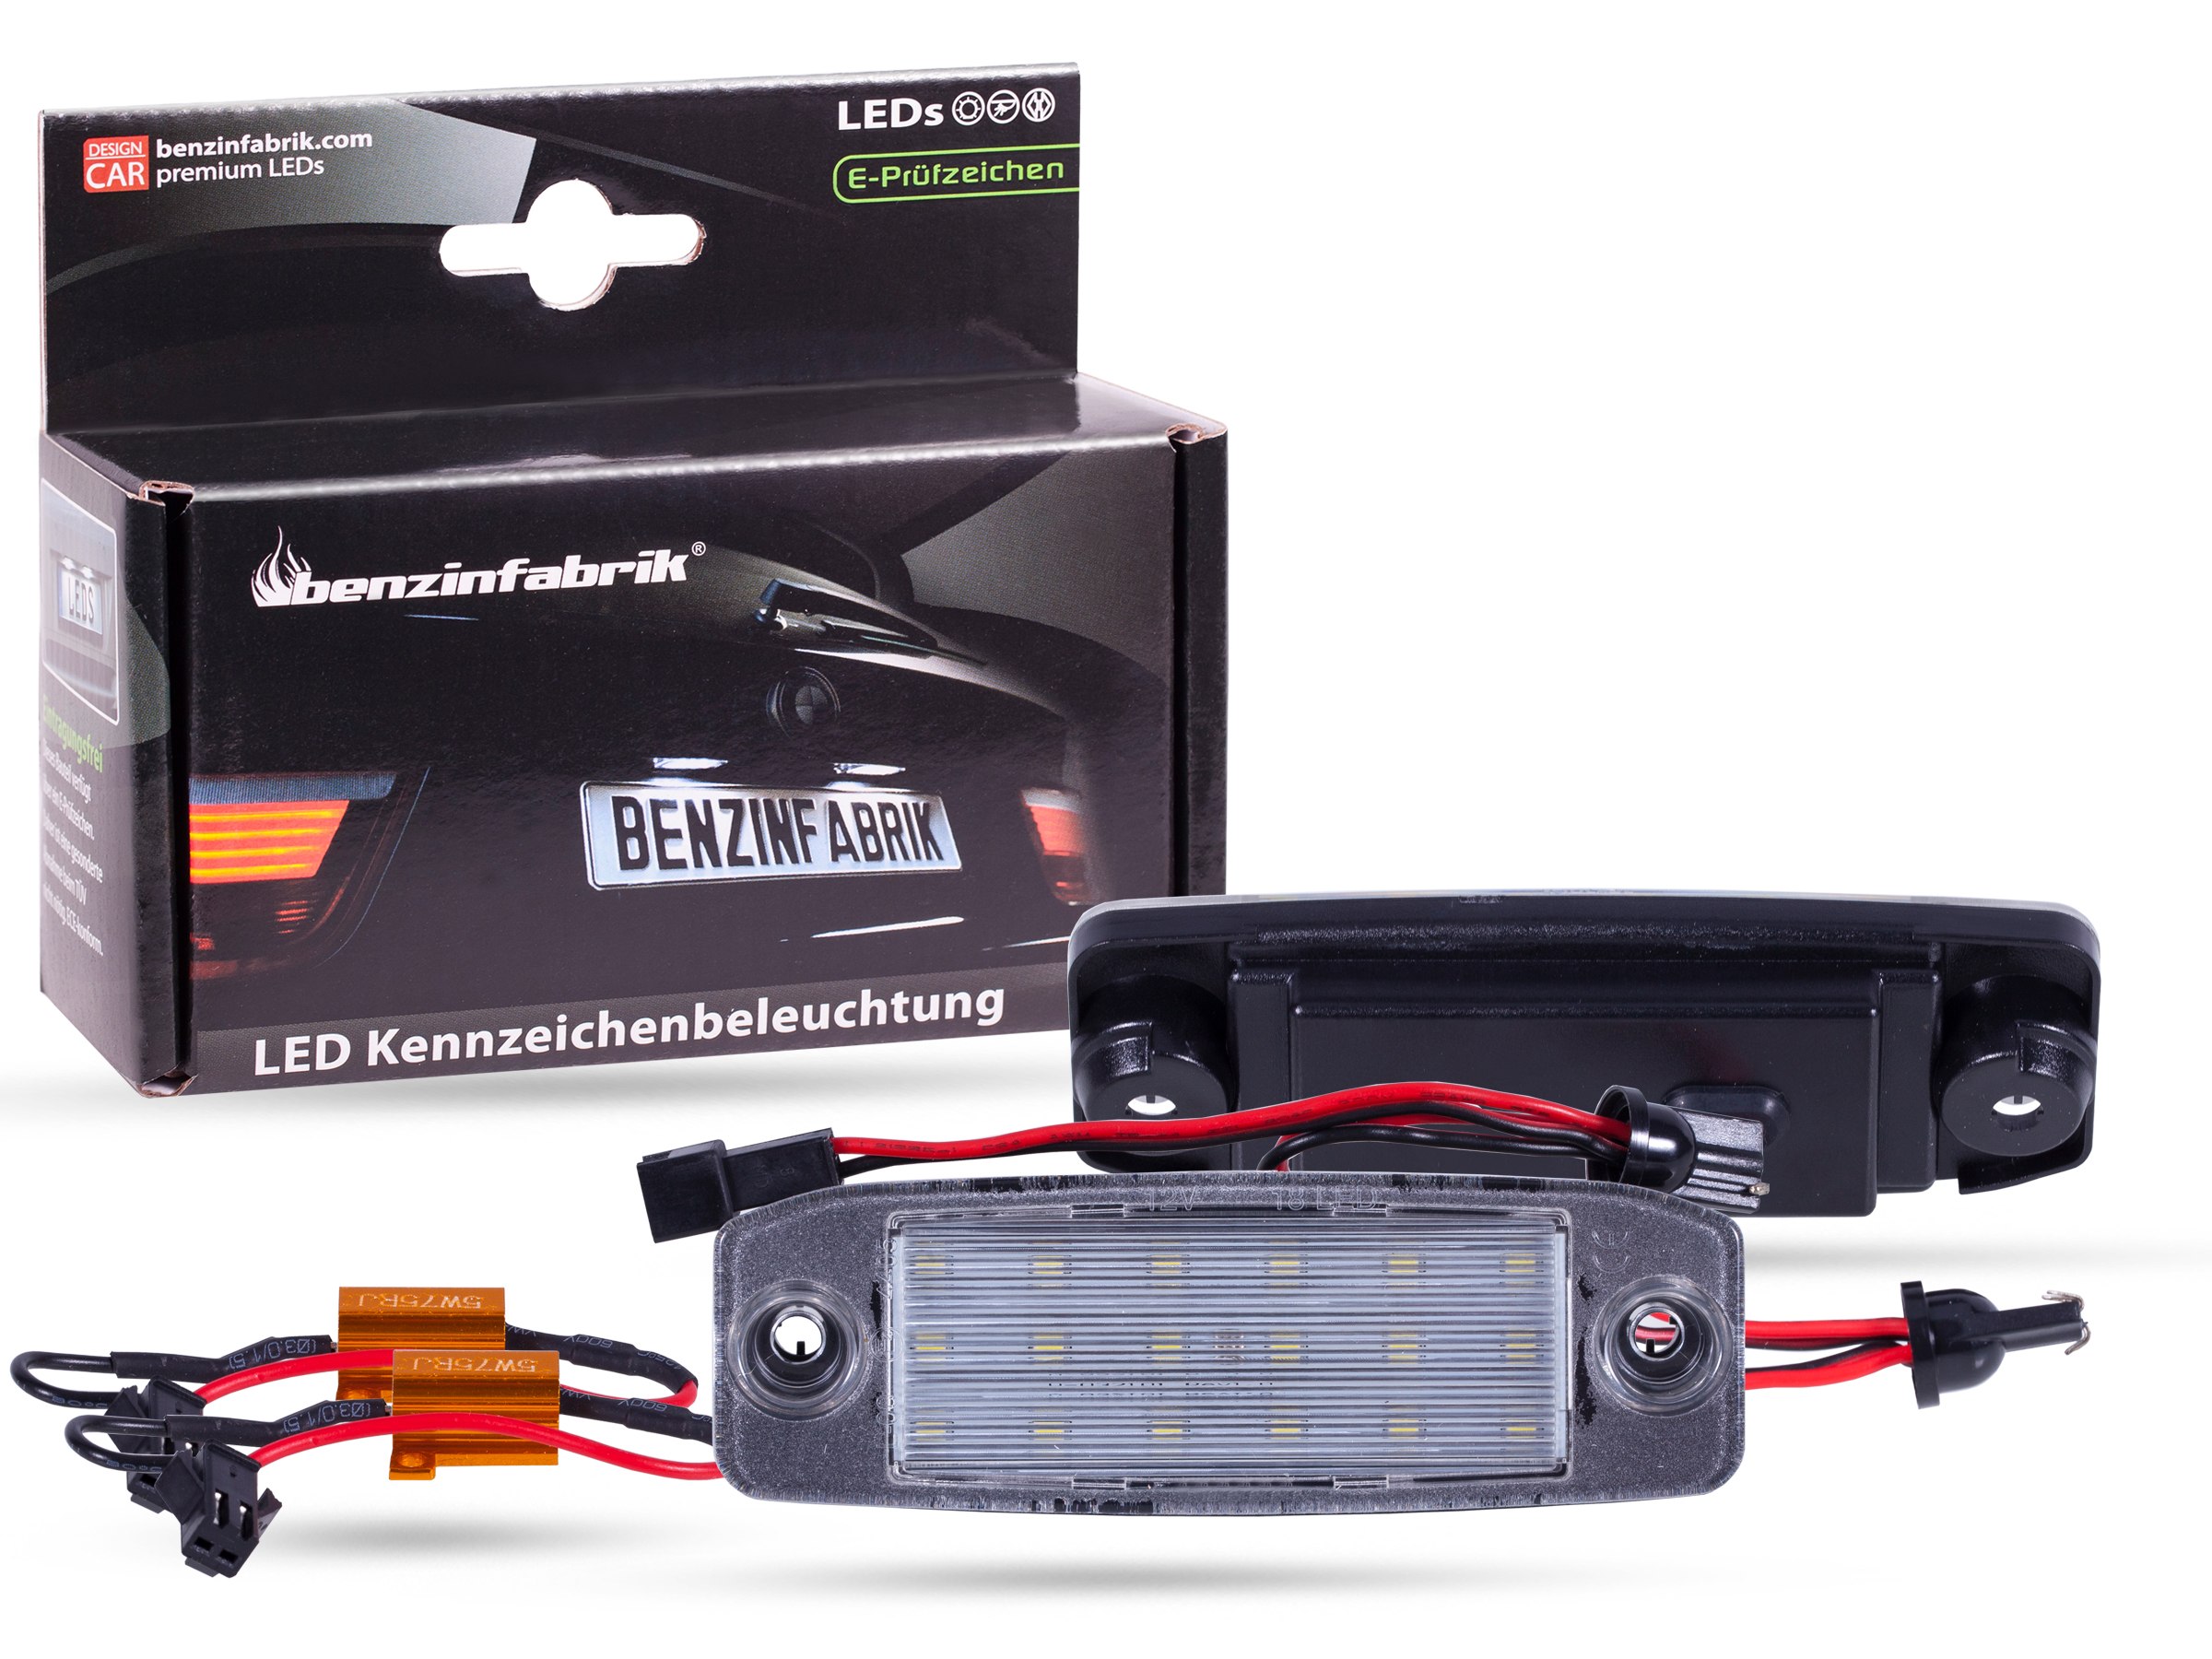 LED Kennzeichenbeleuchtung Module Hyundai Kona, mit E-Prüfzeichen, LED  Kennzeichenbeleuchtung für Hyundai, LED Kennzeichenbeleuchtung